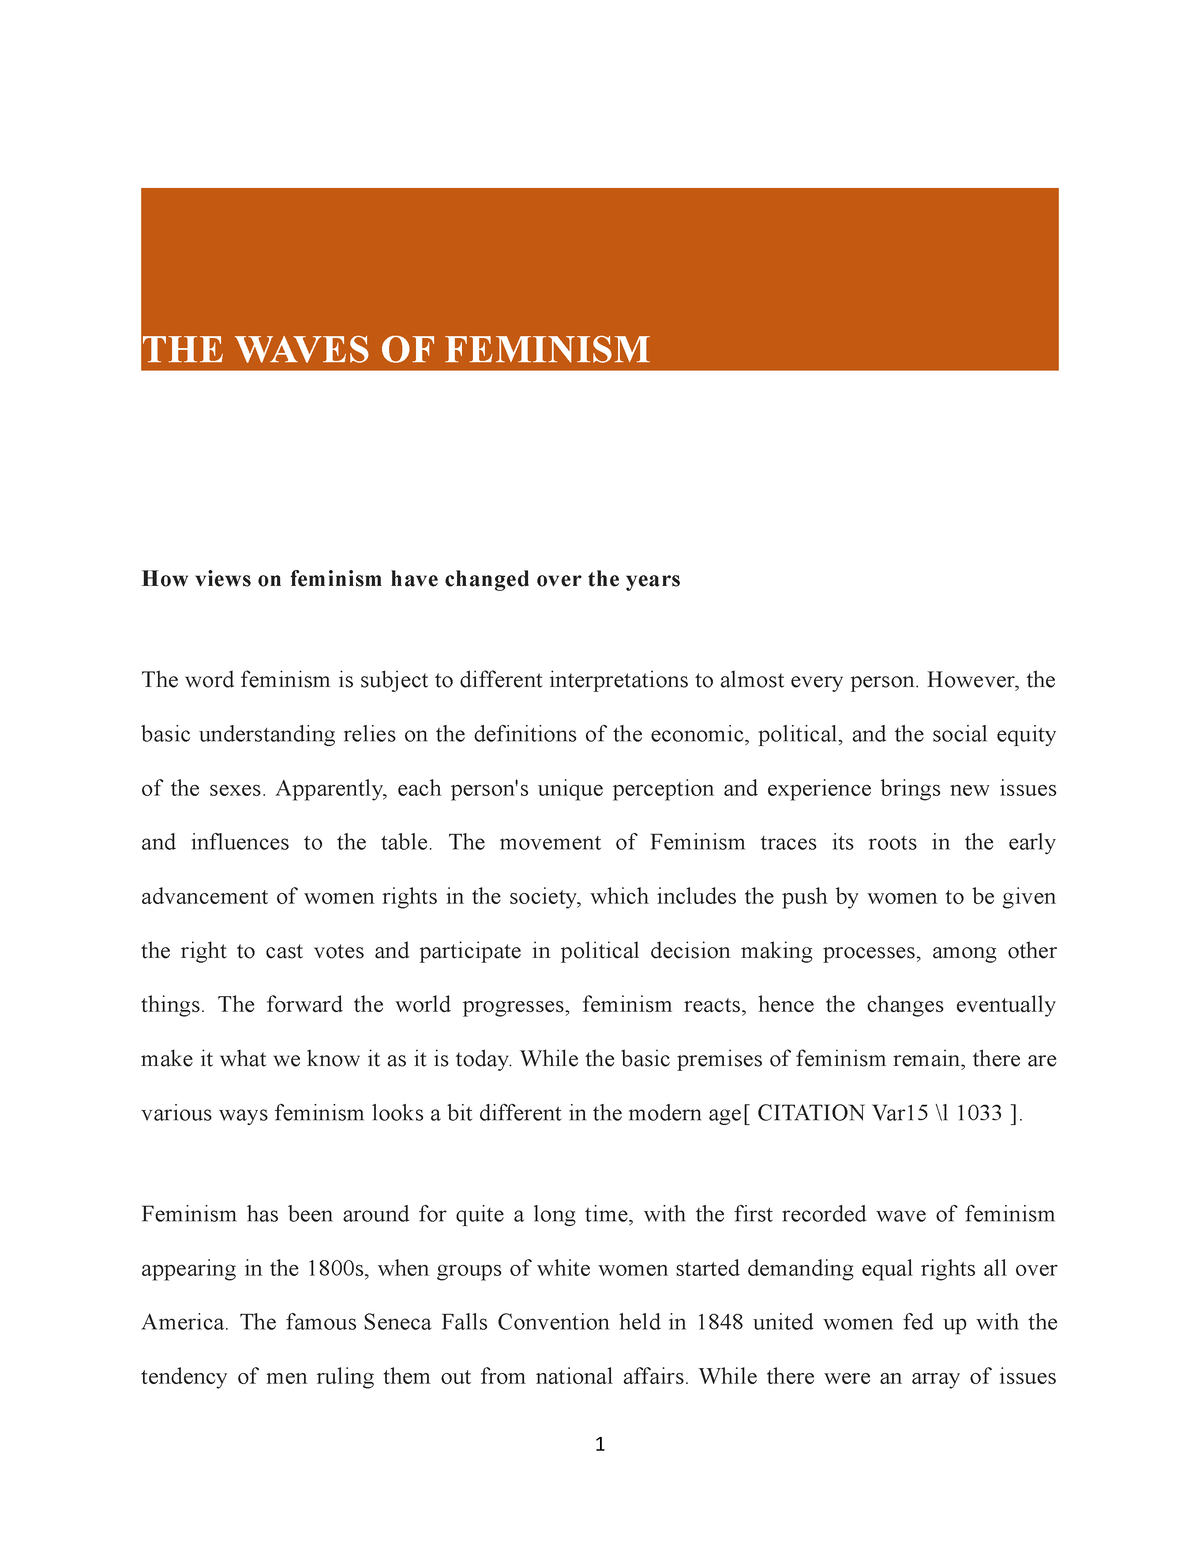 waves of feminism essay